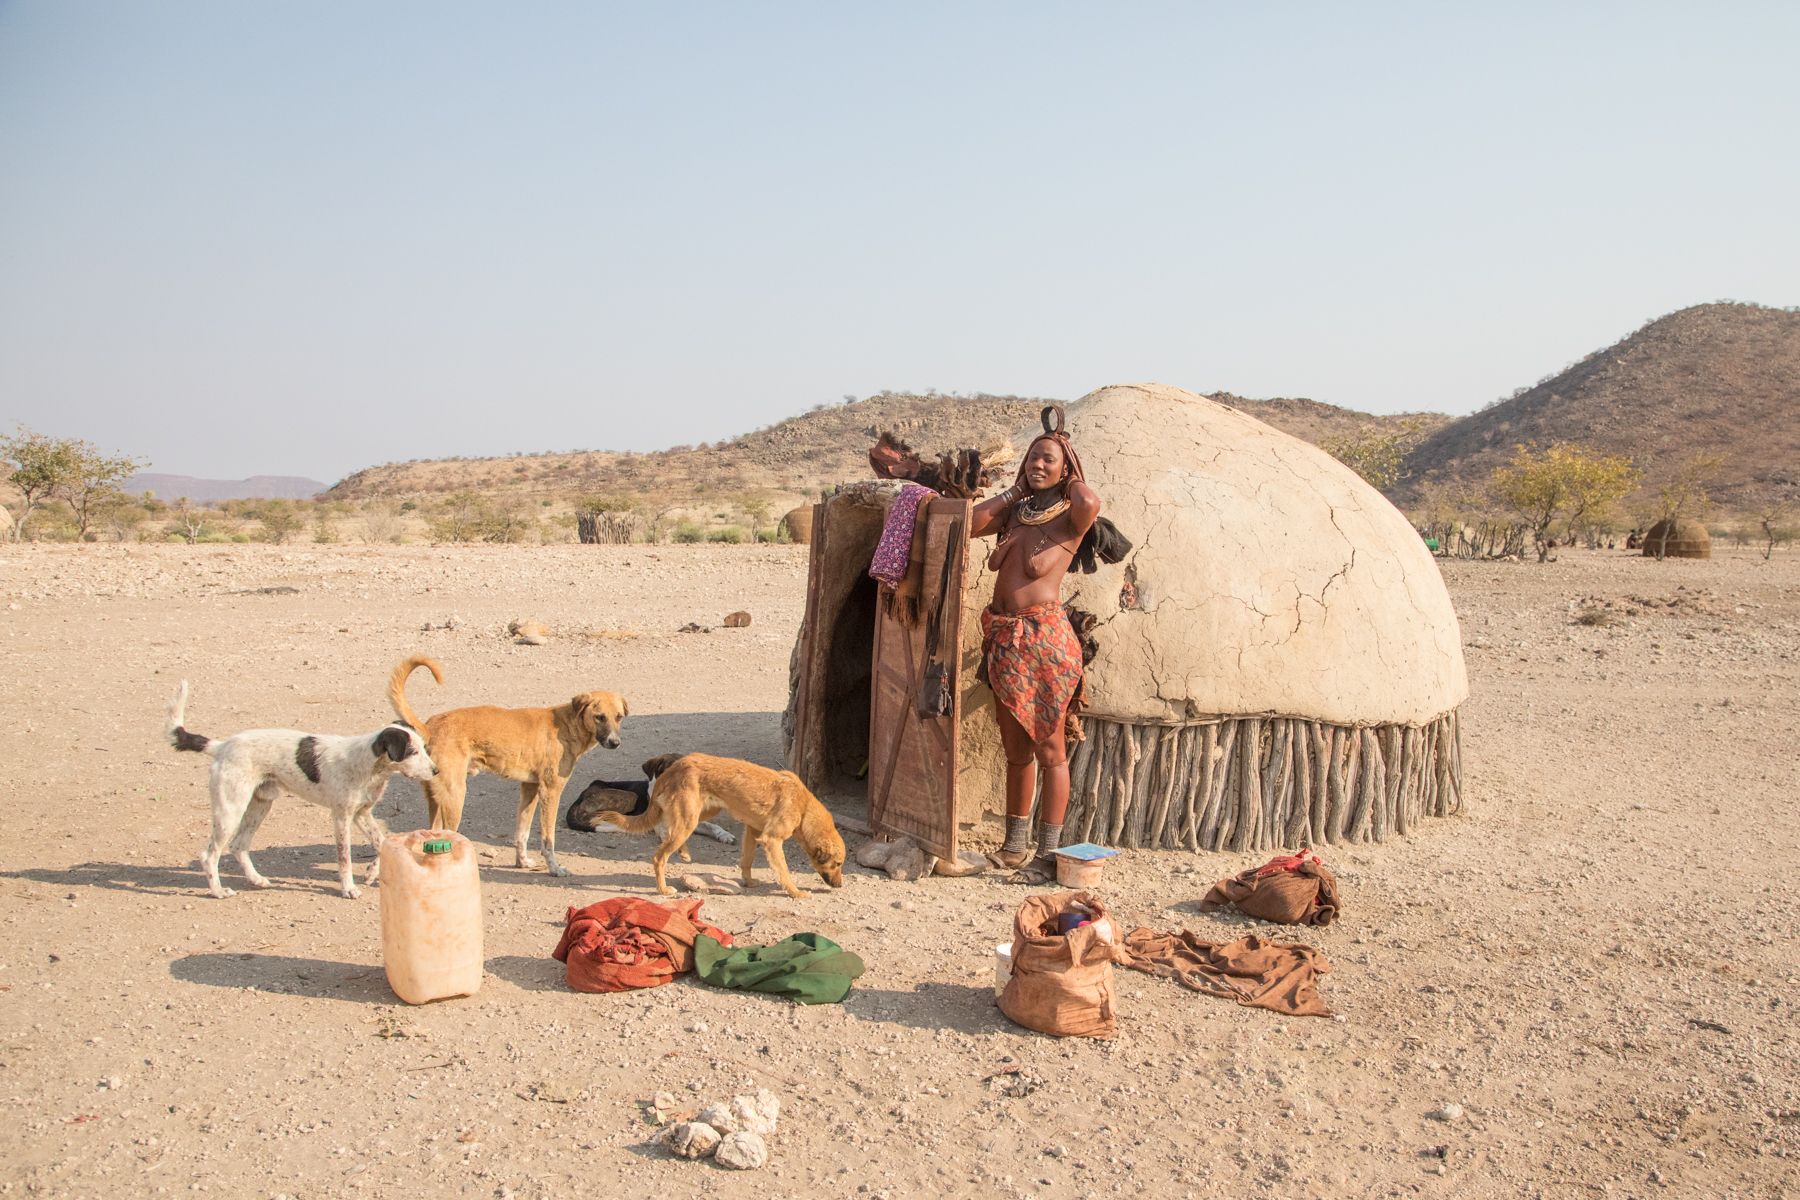 Typical Himba village scene